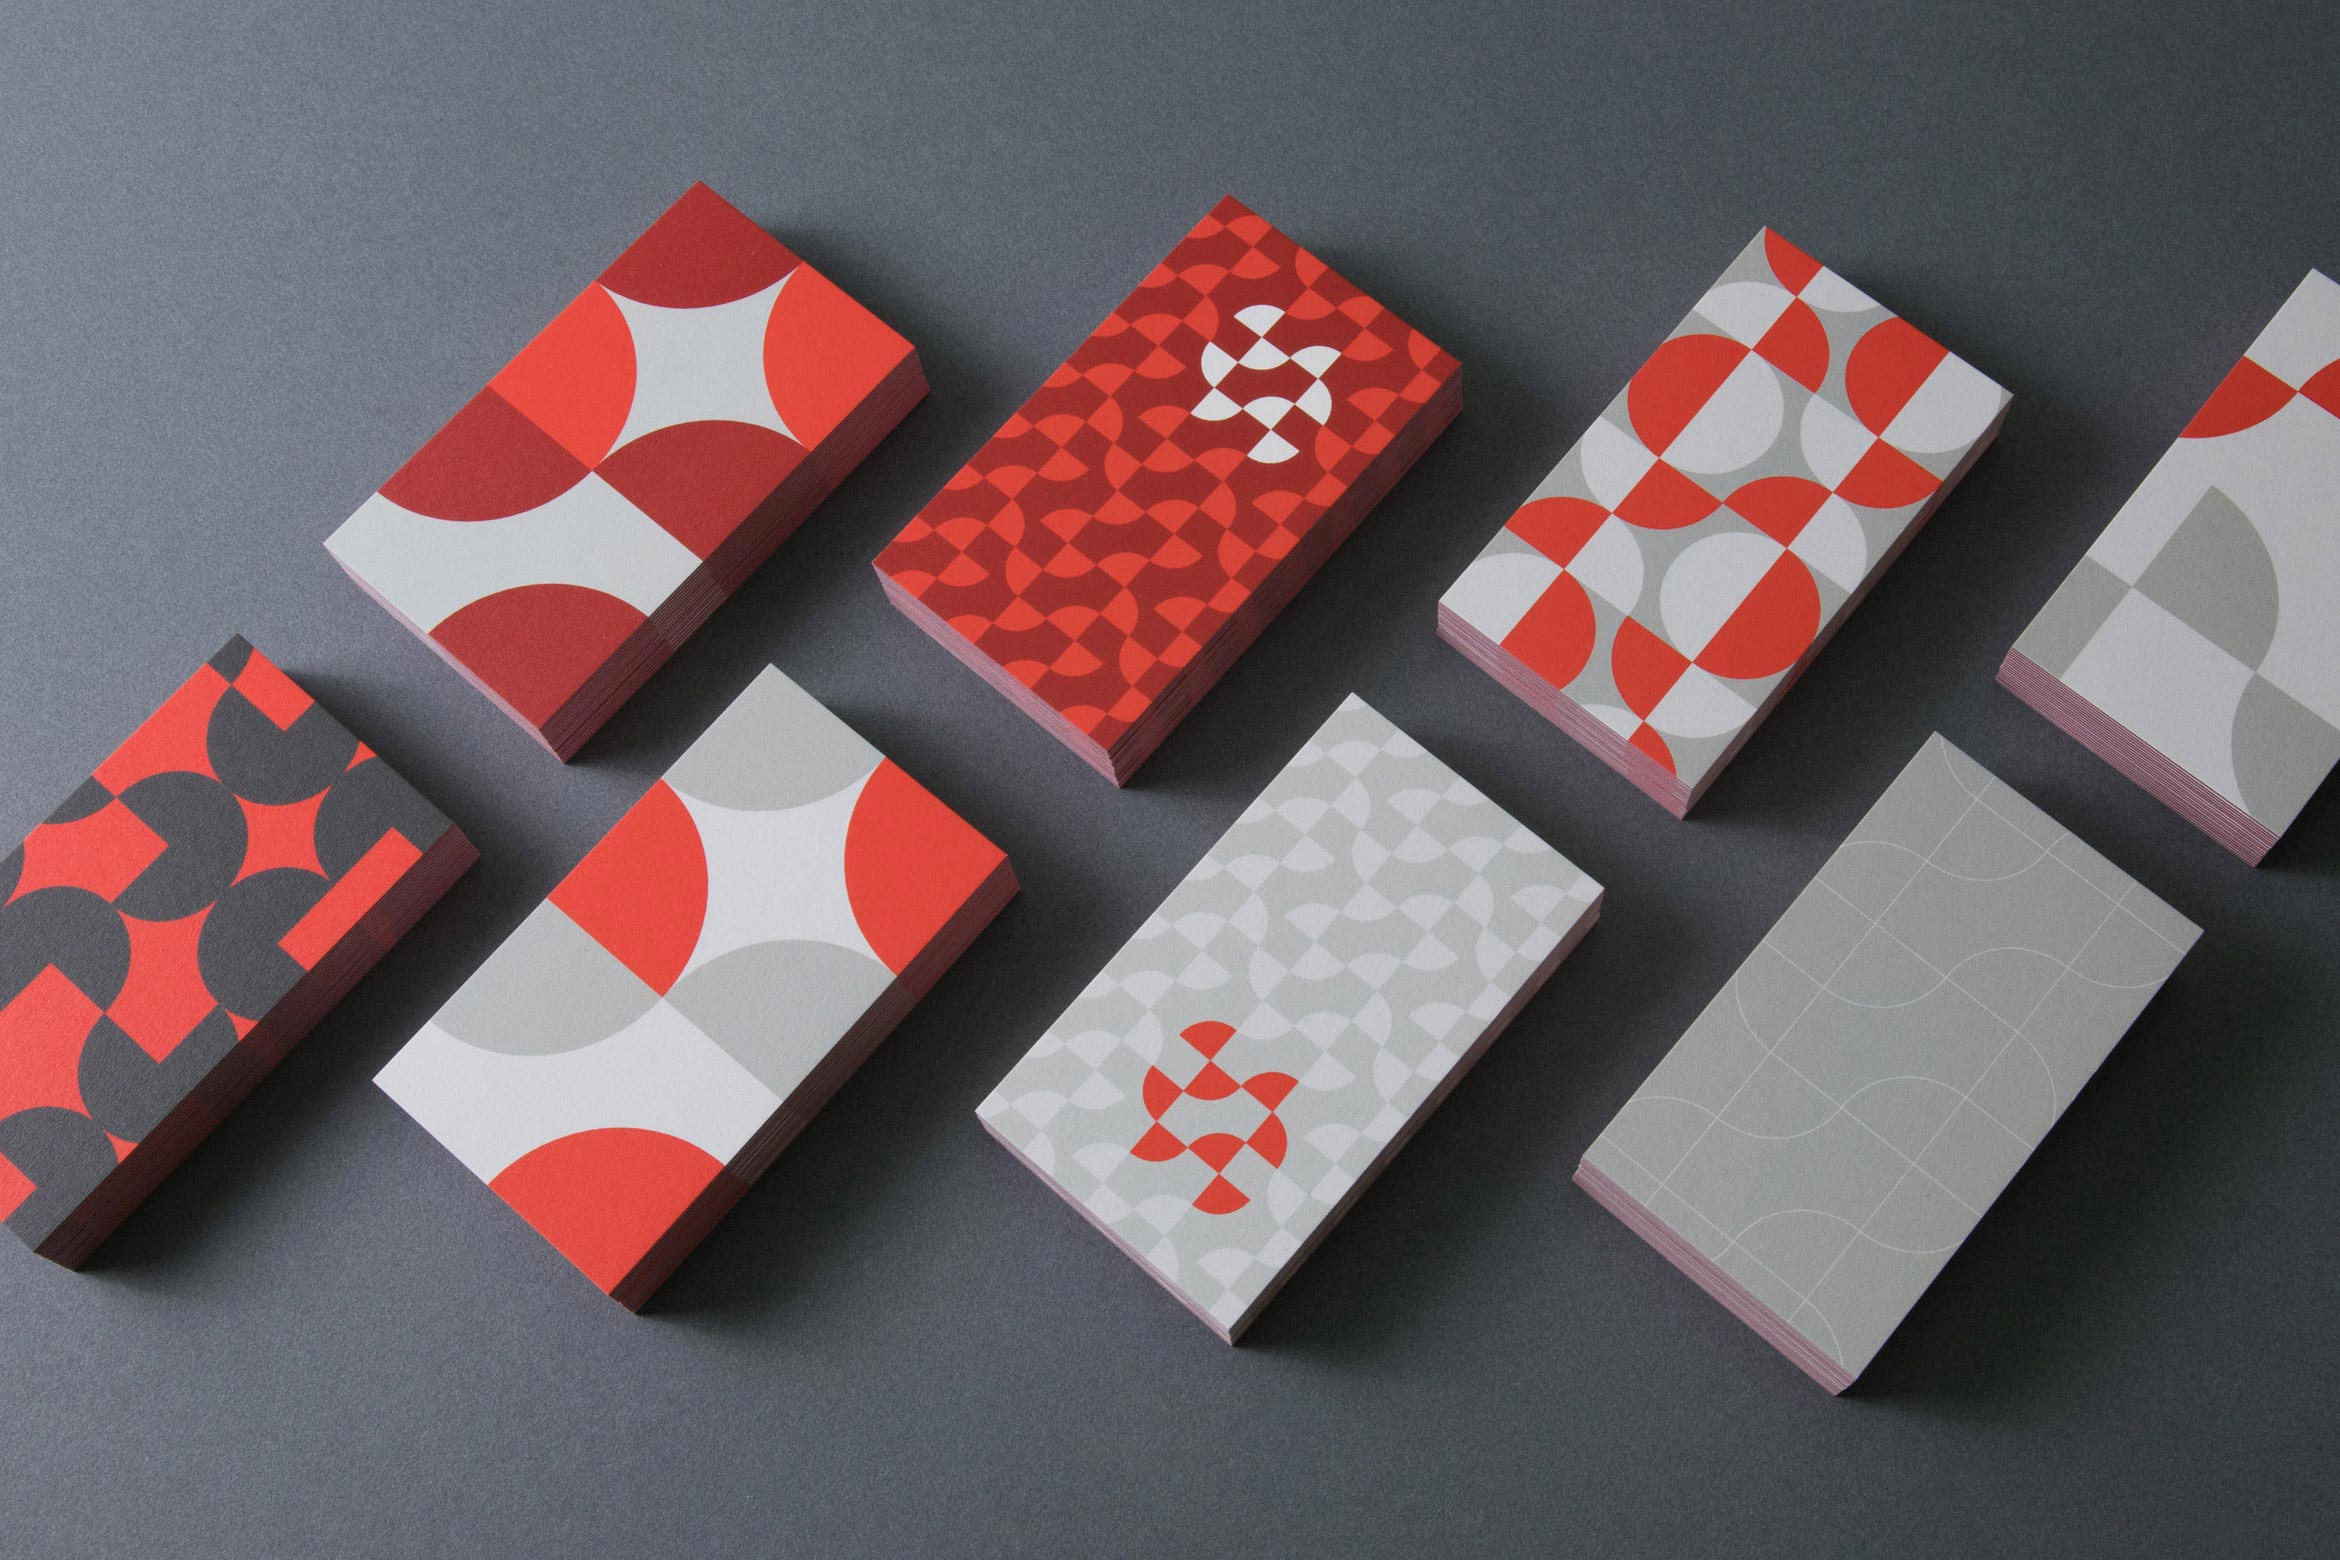 set of 8 business card designs using quarter and half circles